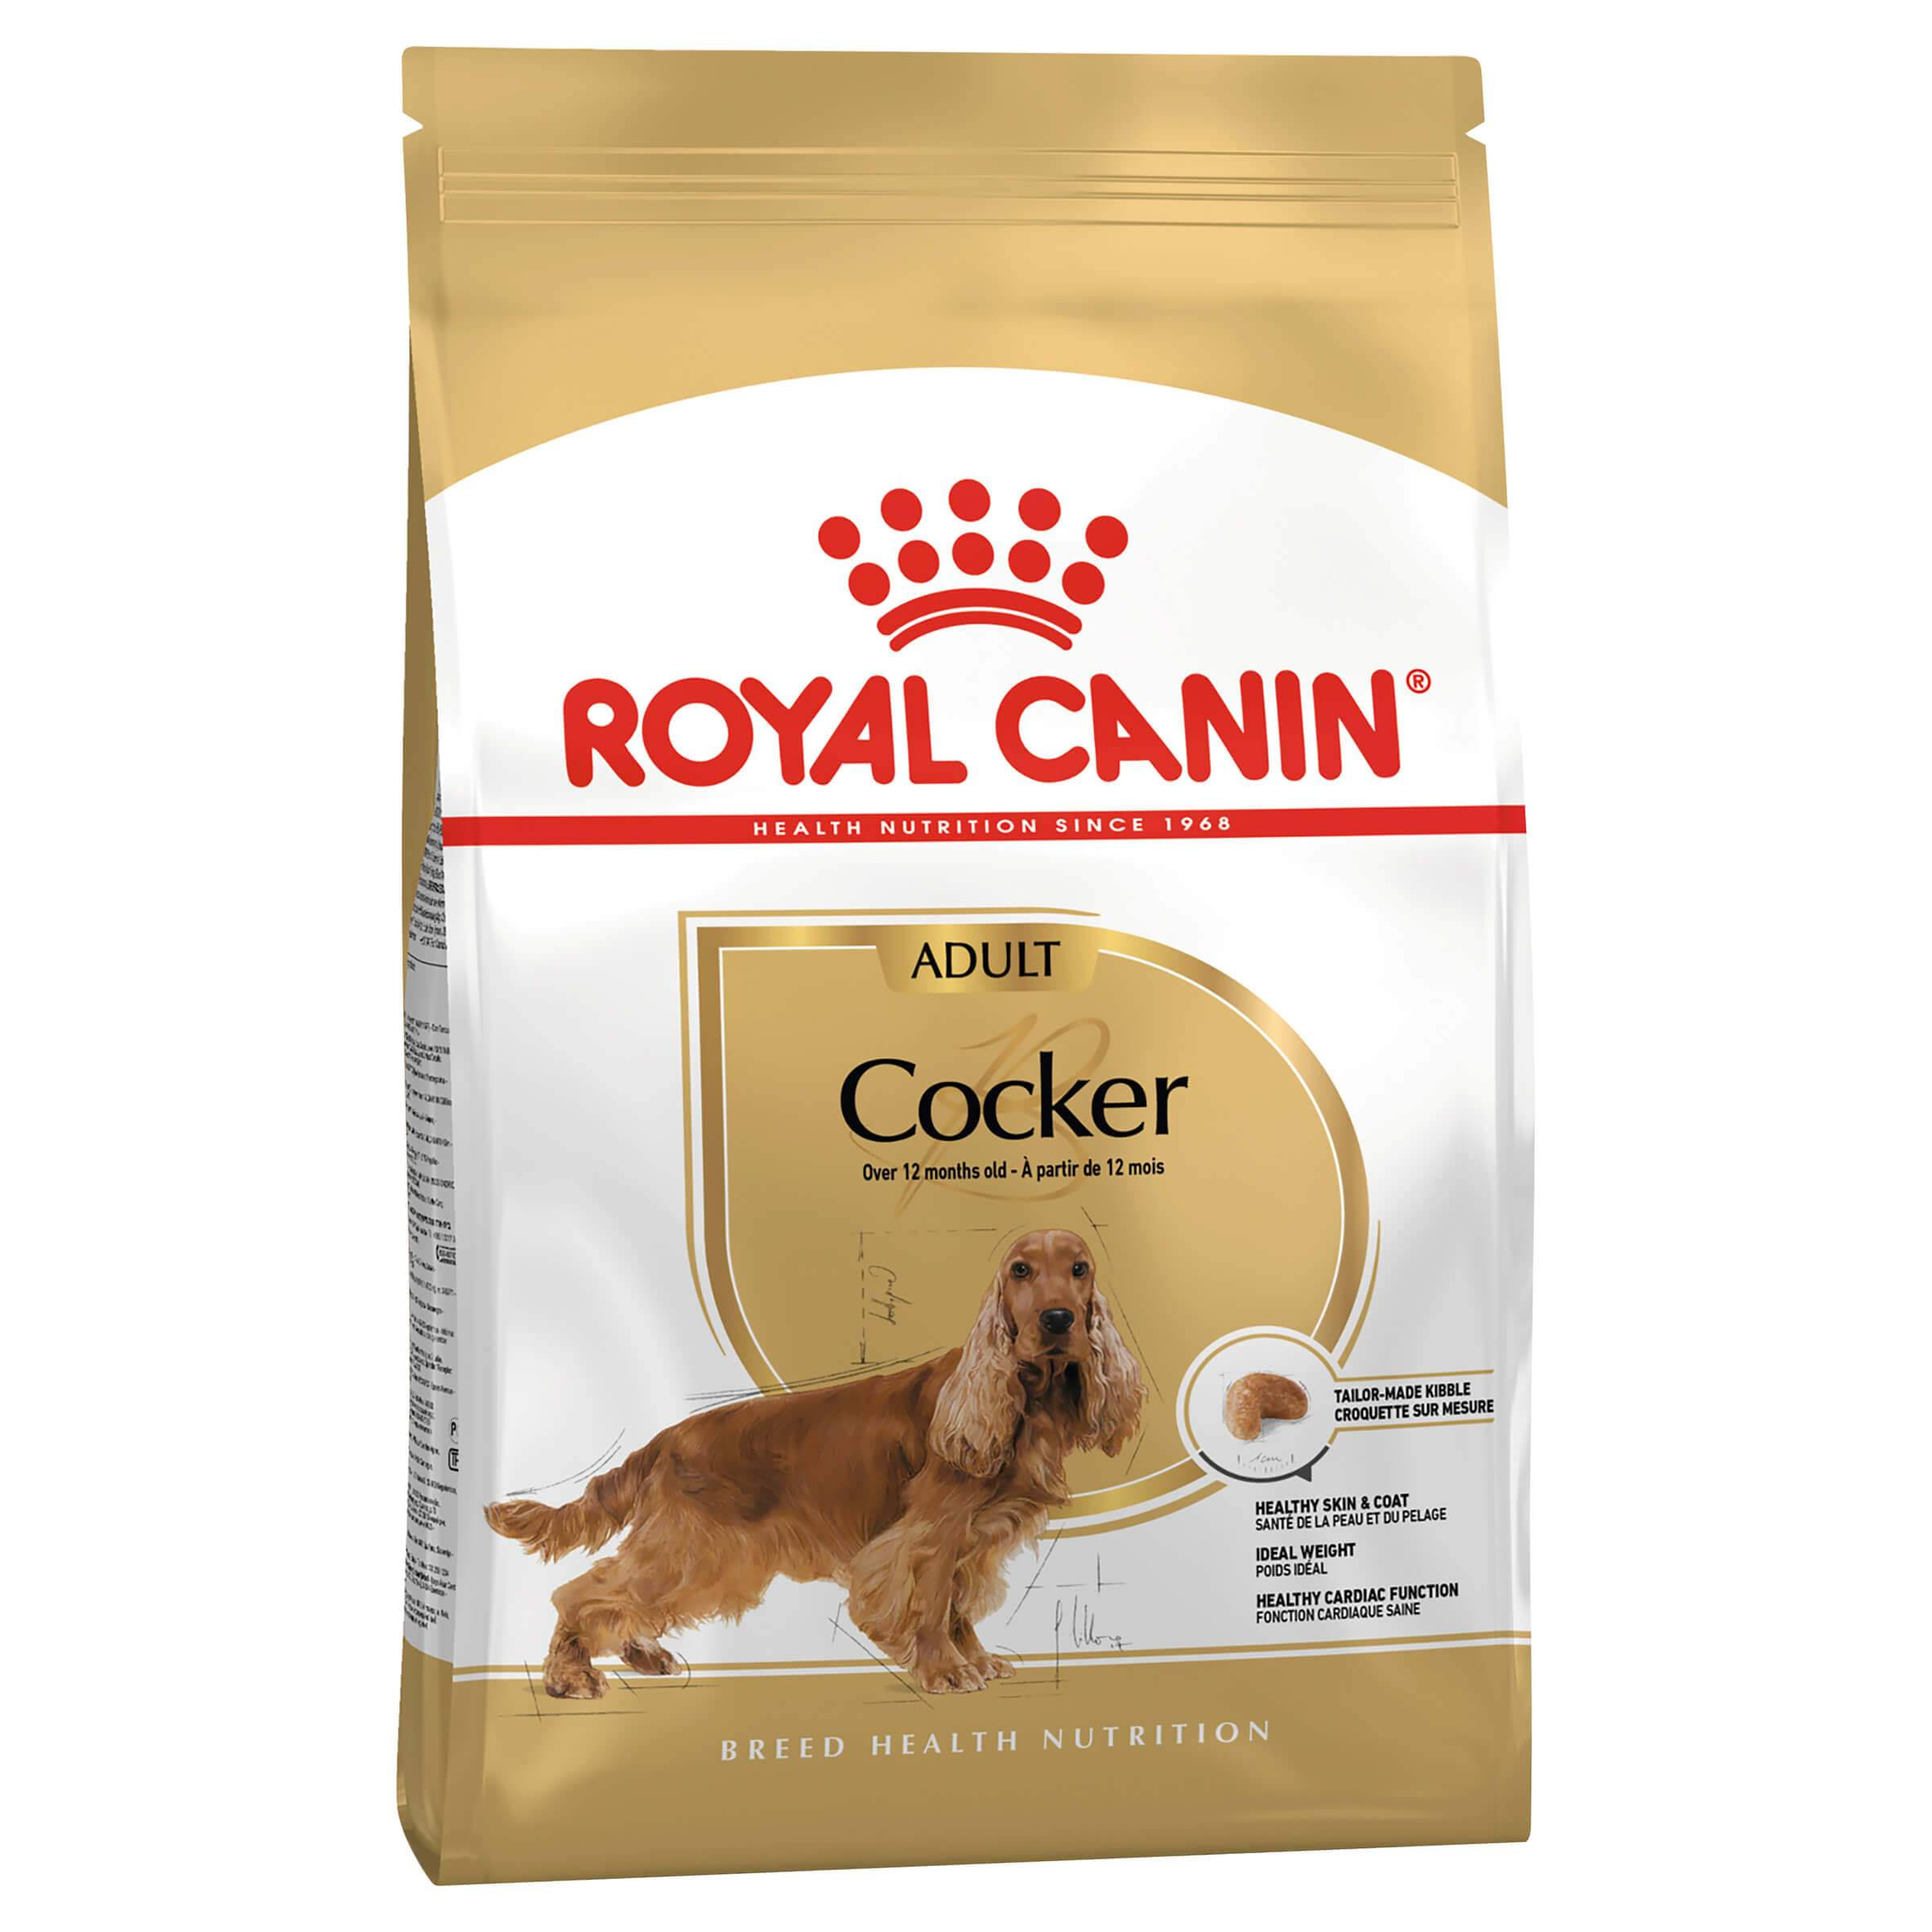 Royal Canin Cocker Adult Dog Food